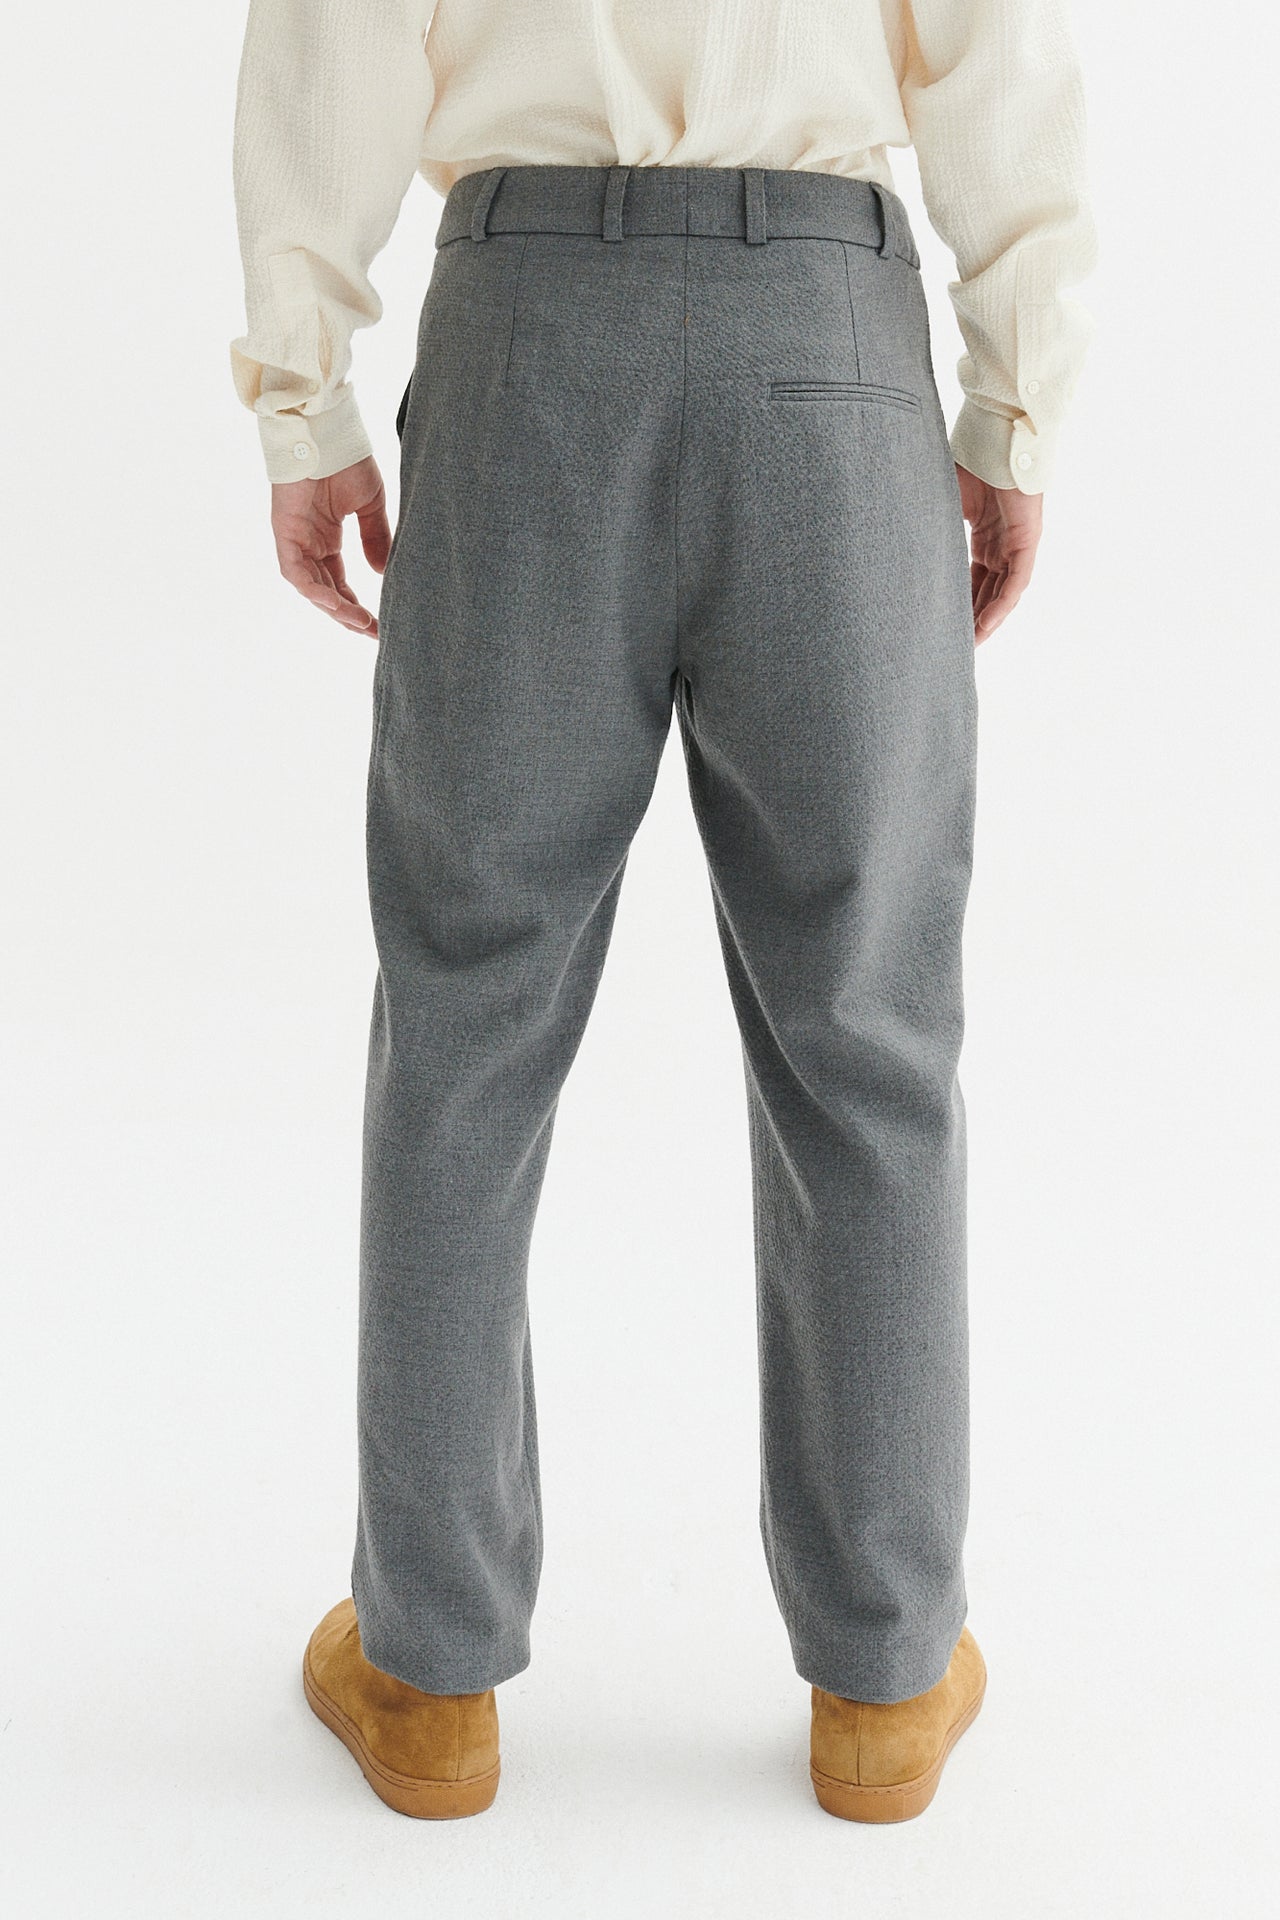 Genuine Trousers in a Grey Italian Virgin Wool and Cotton Seersucker by Subalpino